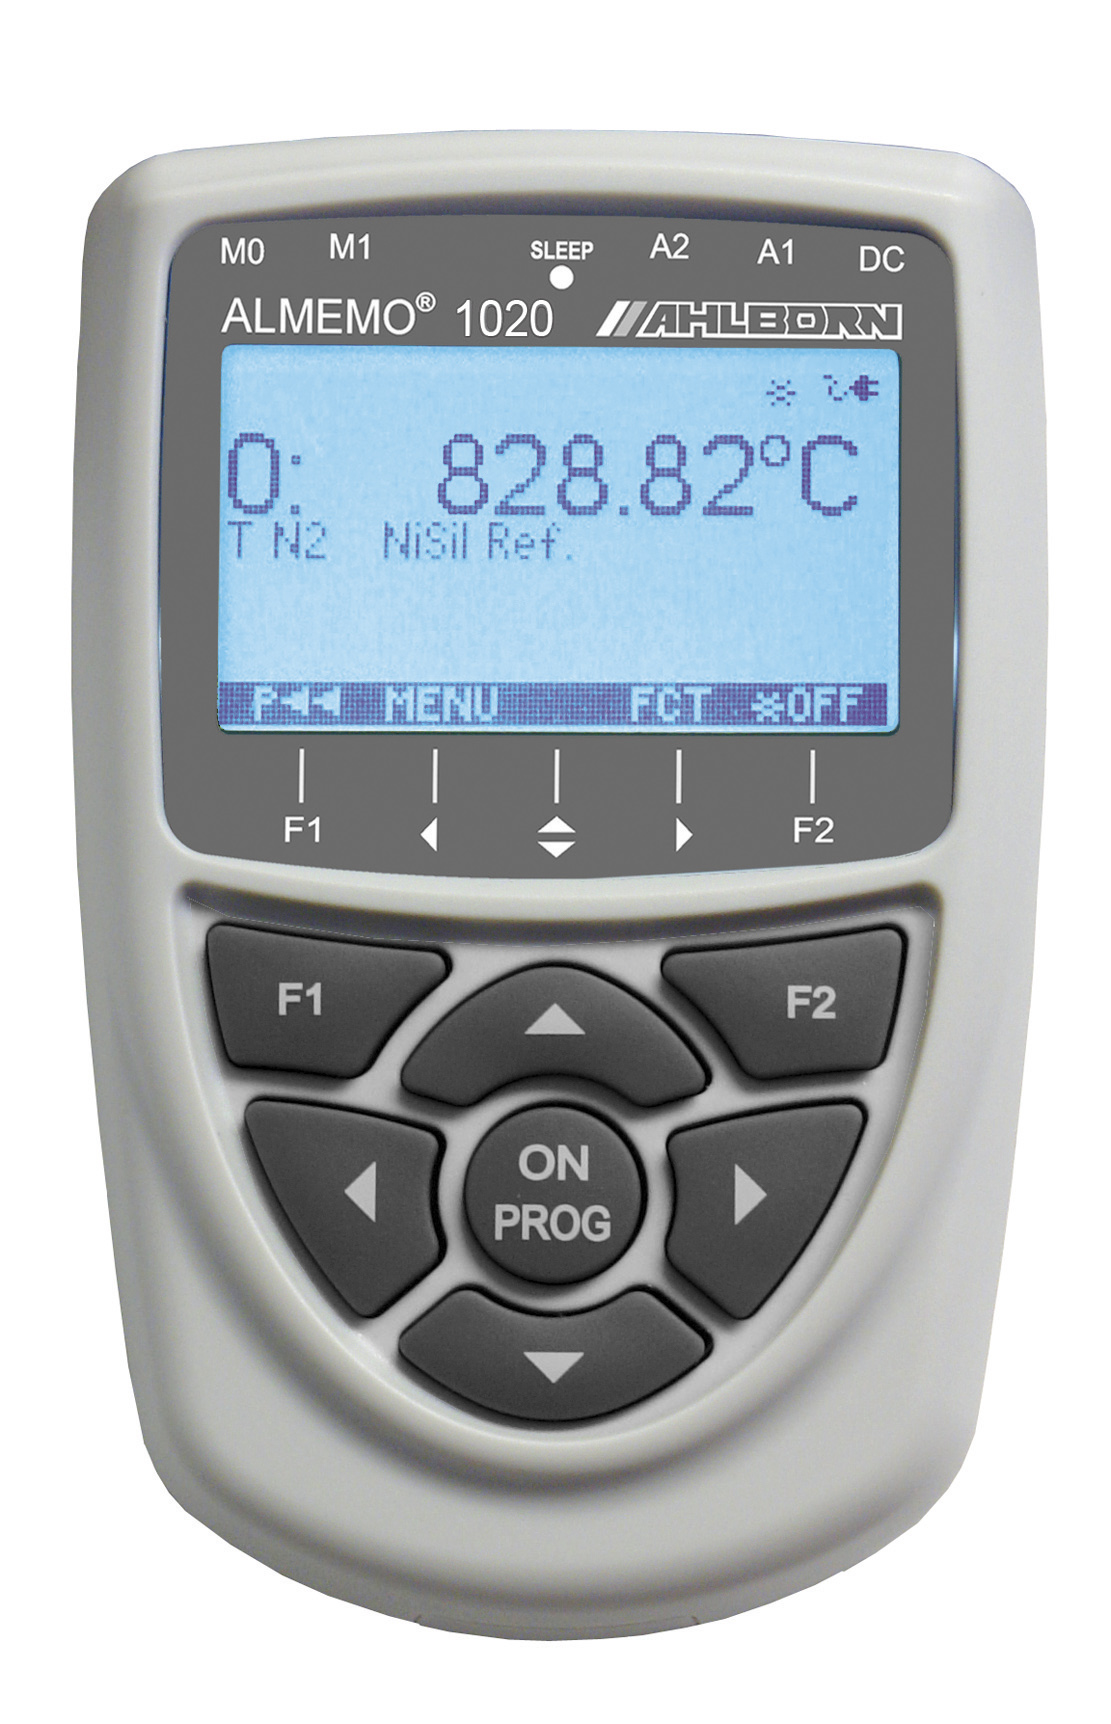 Ahlborn almemo 1020 thermokoppel referentie meter